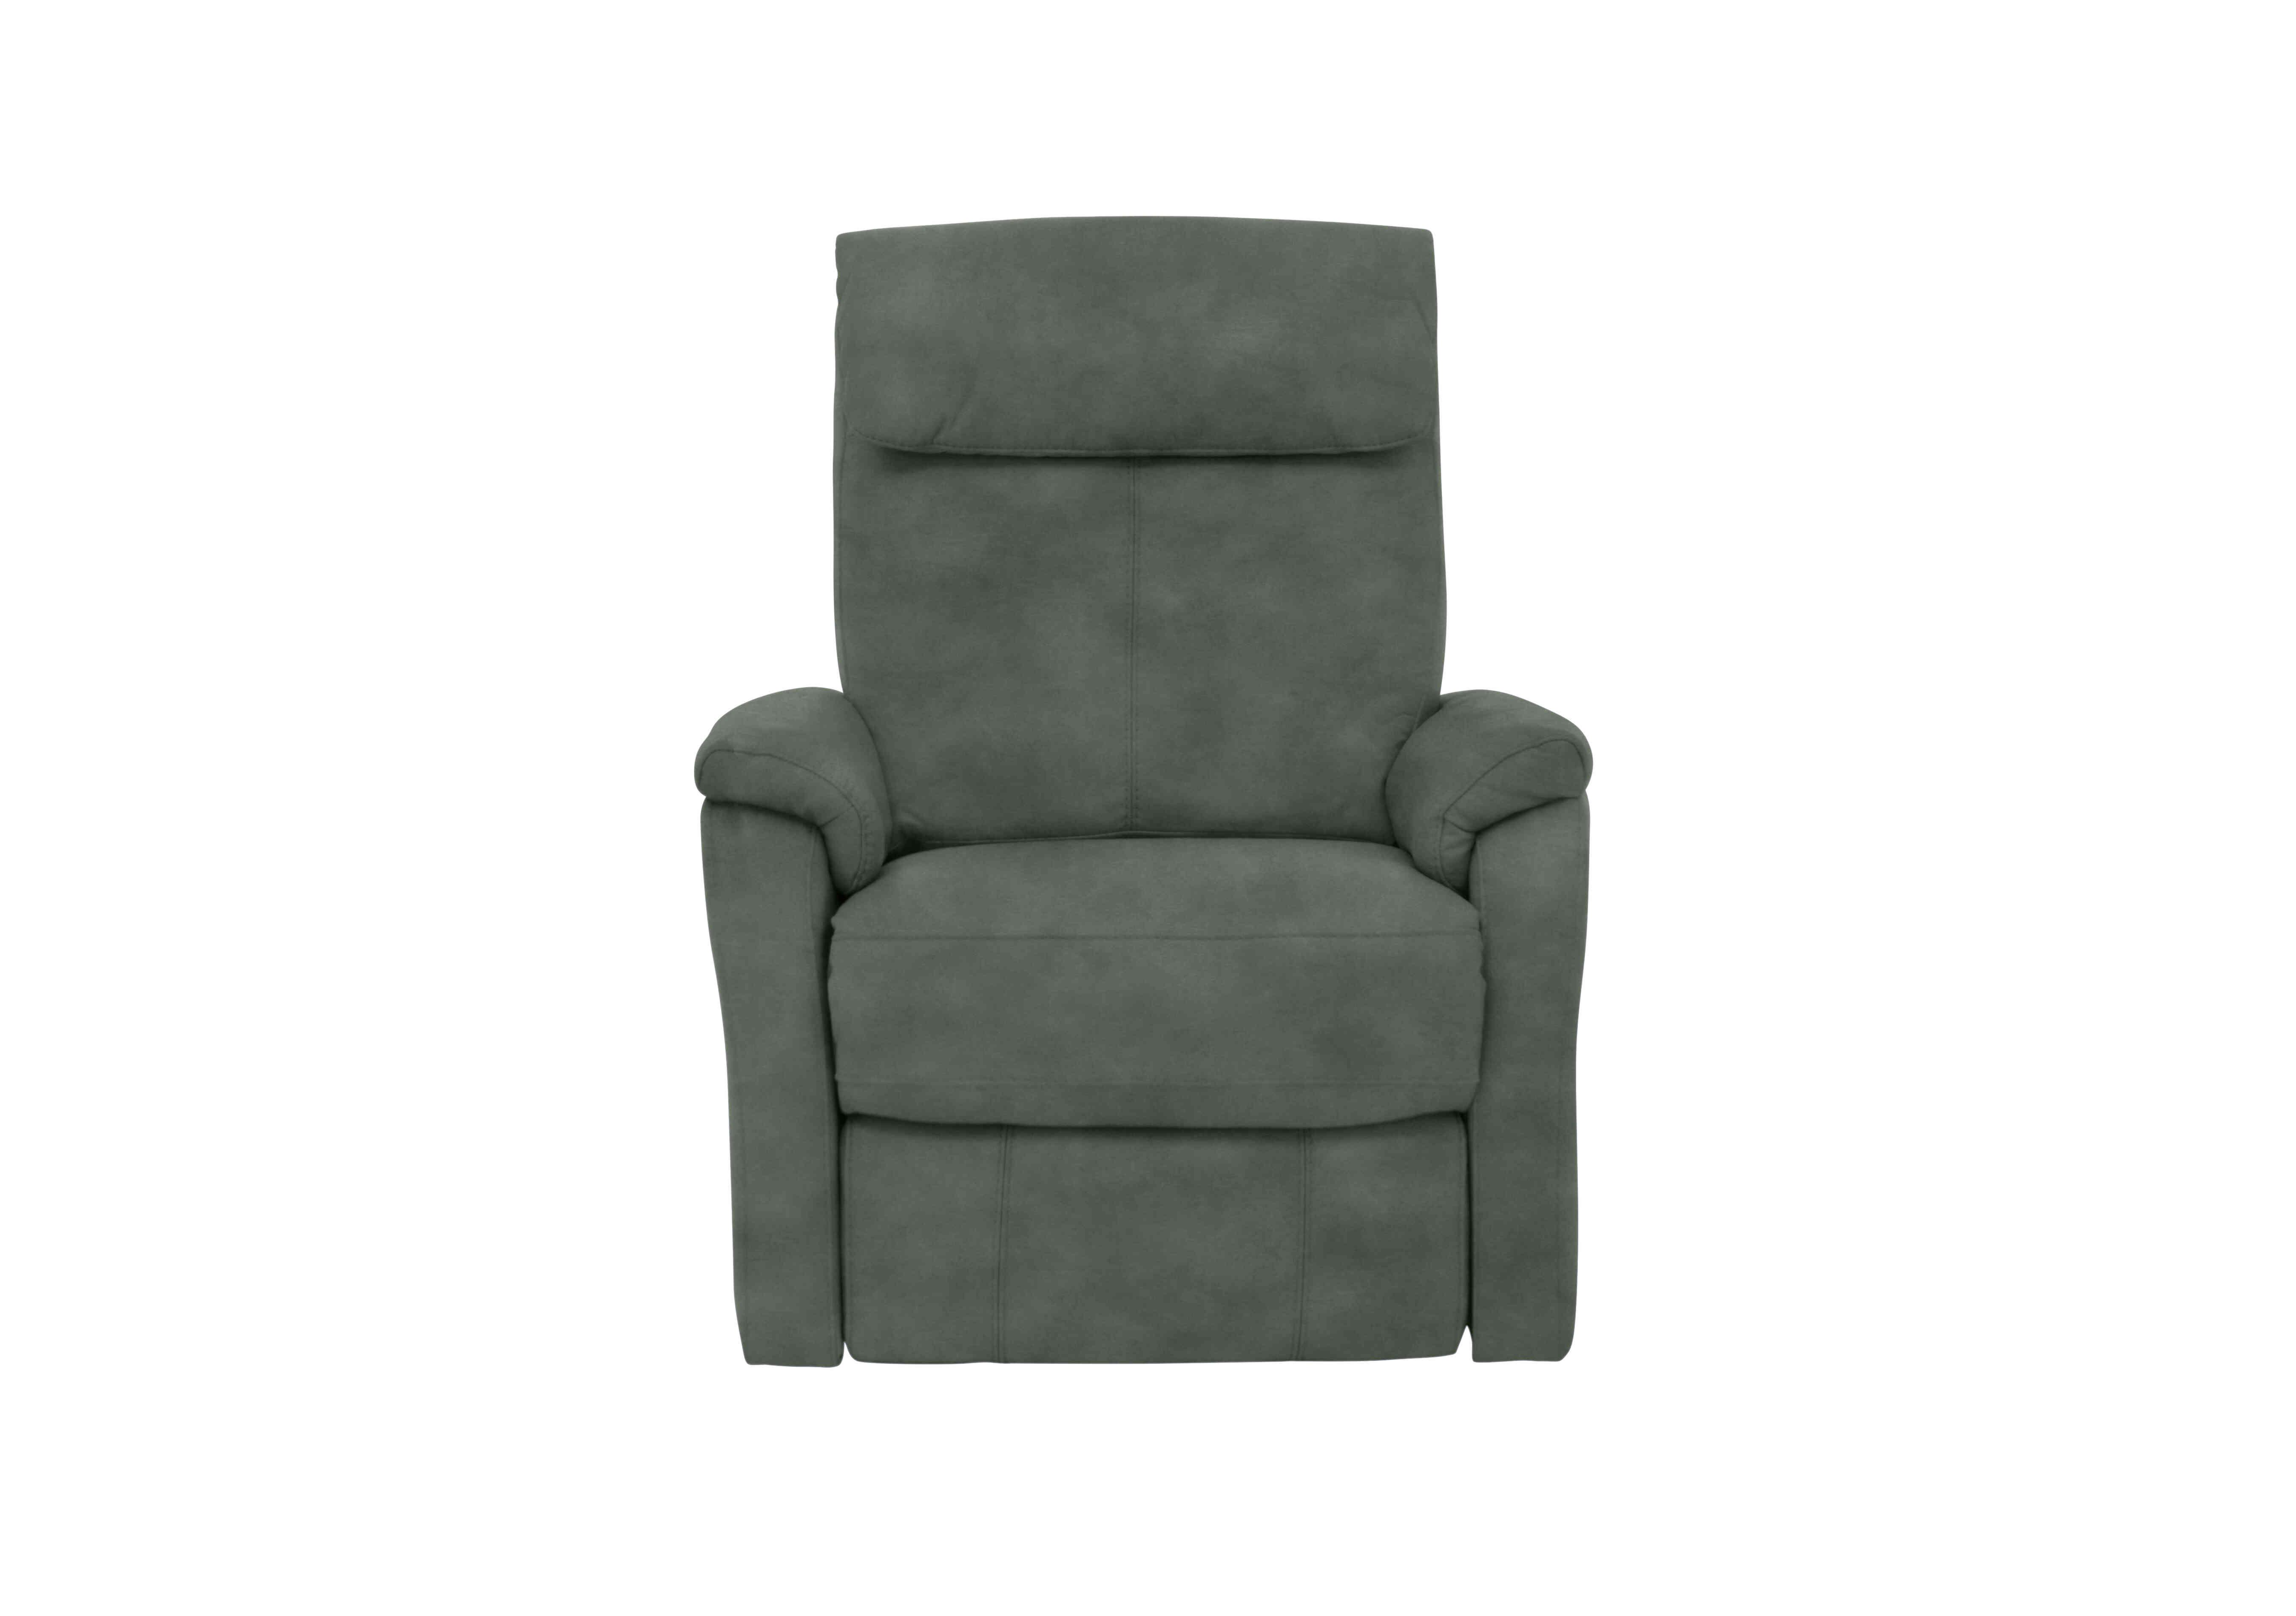 Rowan Fabric Swivel Rocker Recliner Armchair in Fab-Dec-R09 Neutral Grey on Furniture Village